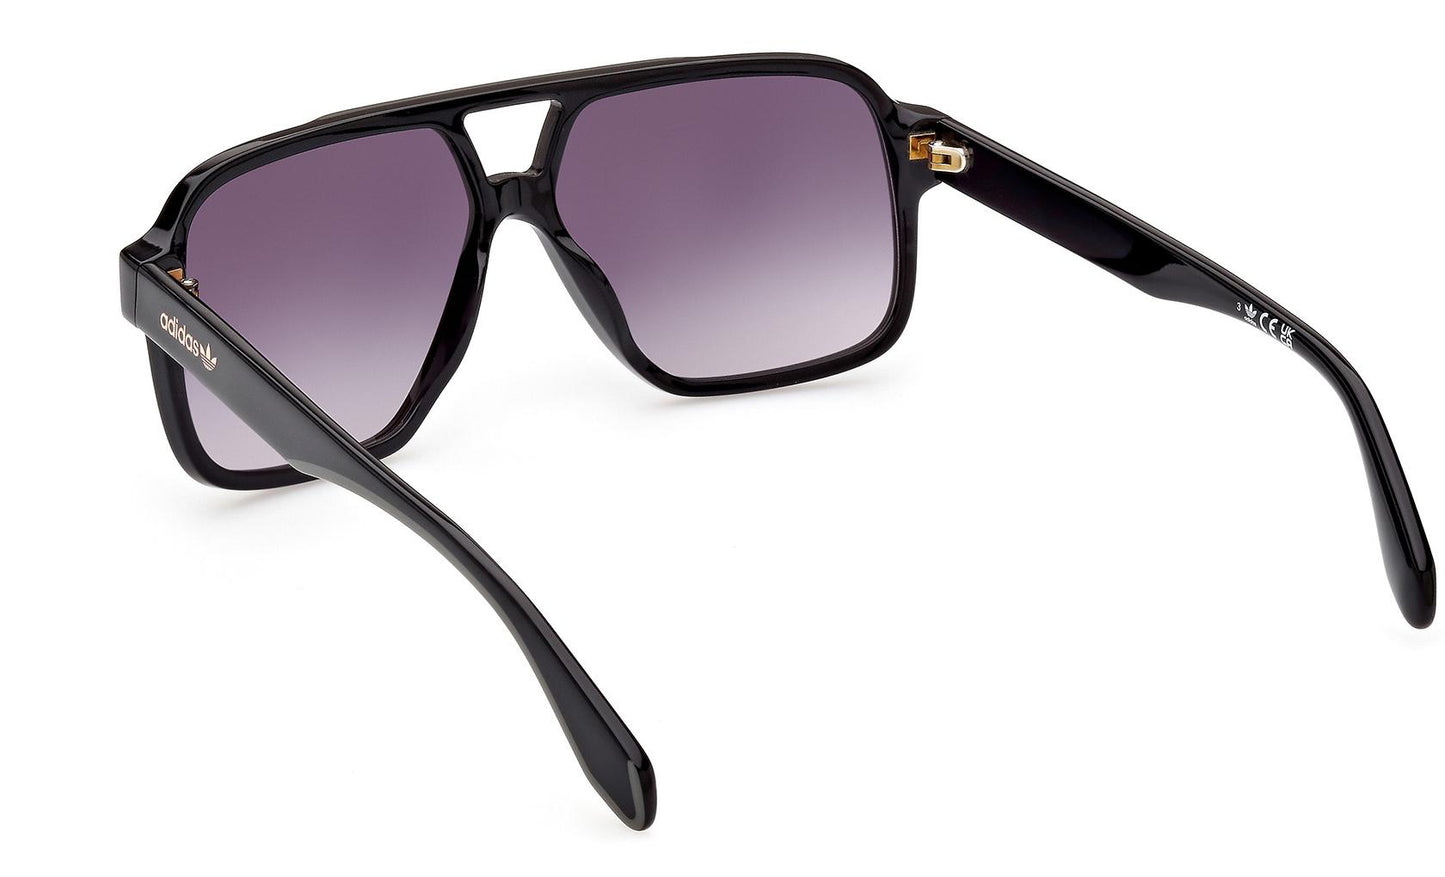 Adidas Originals Sunglasses OR0066 01B